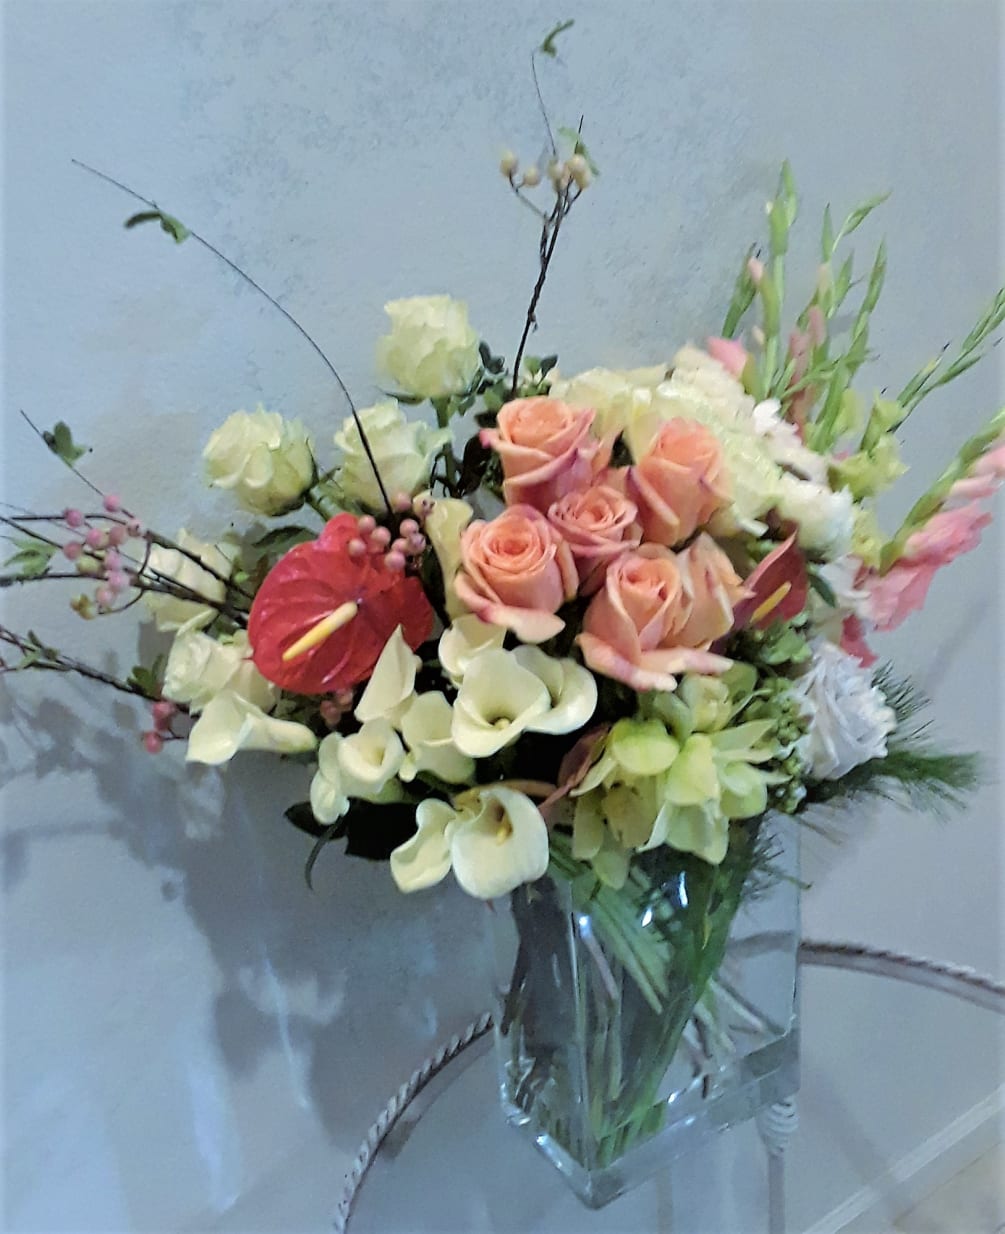 Order this stunning arrangement in rectangular glass vase, with roses, anthurium, calla